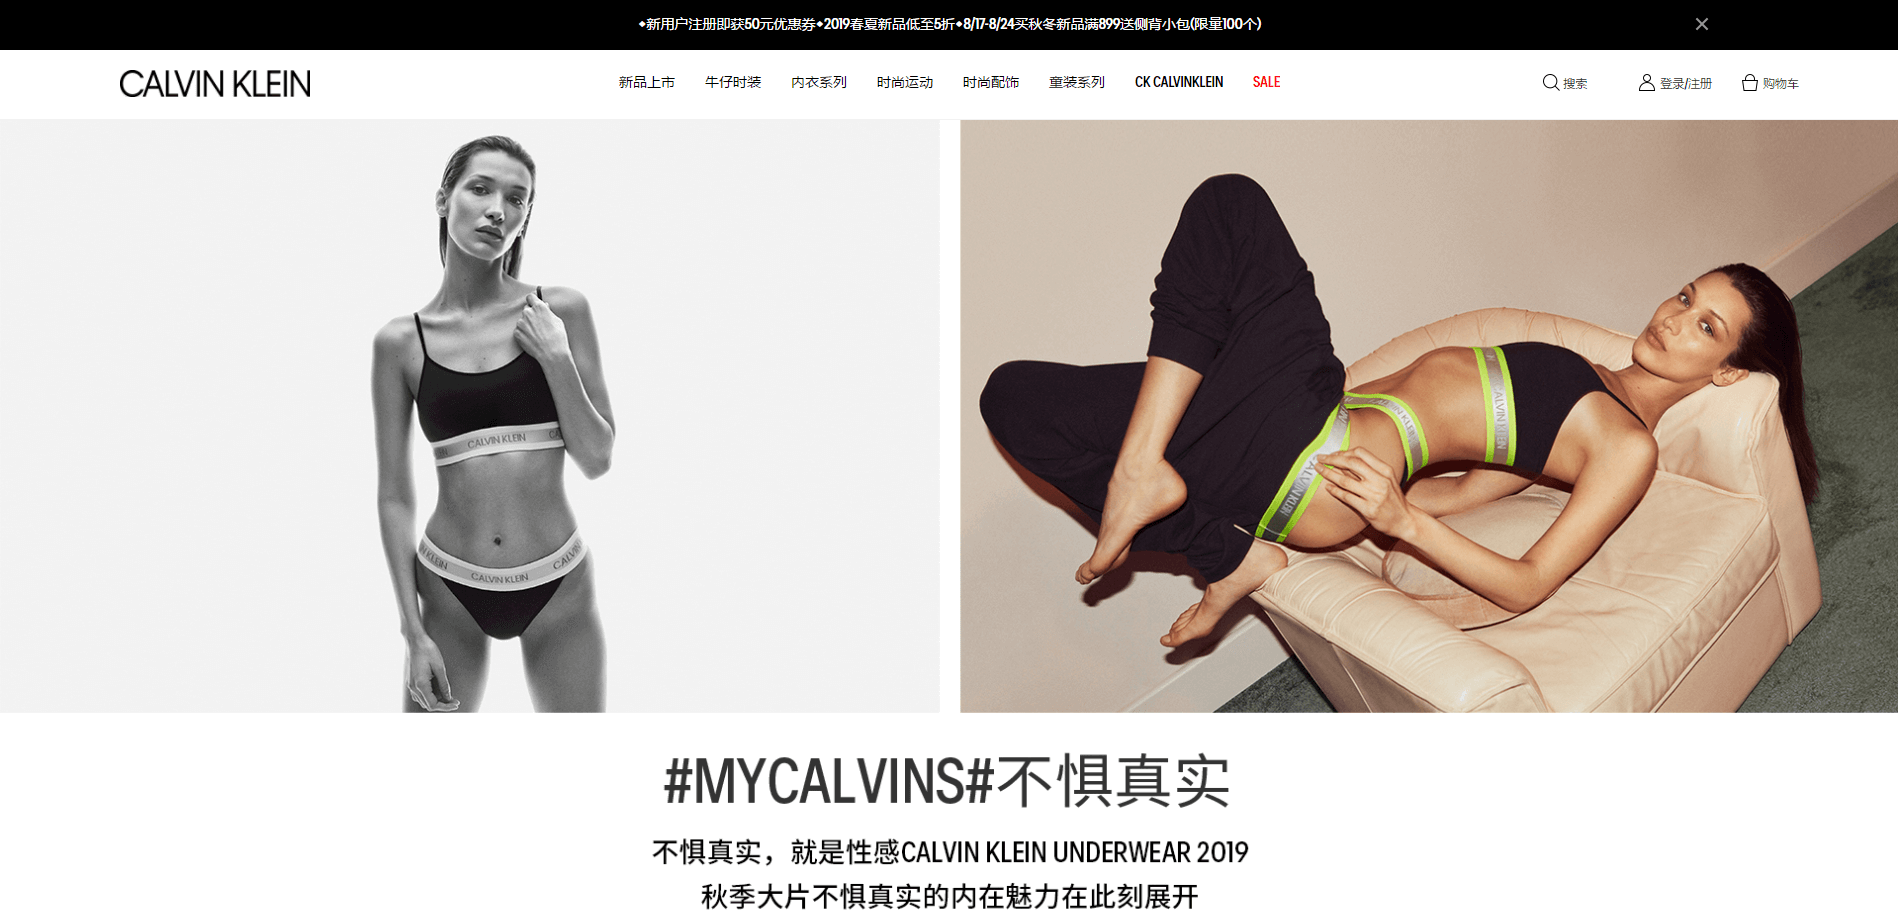 Calvin Klein官网 calvinklein中国官网 源于美国的个性时尚品牌“Canelin Kiskha”